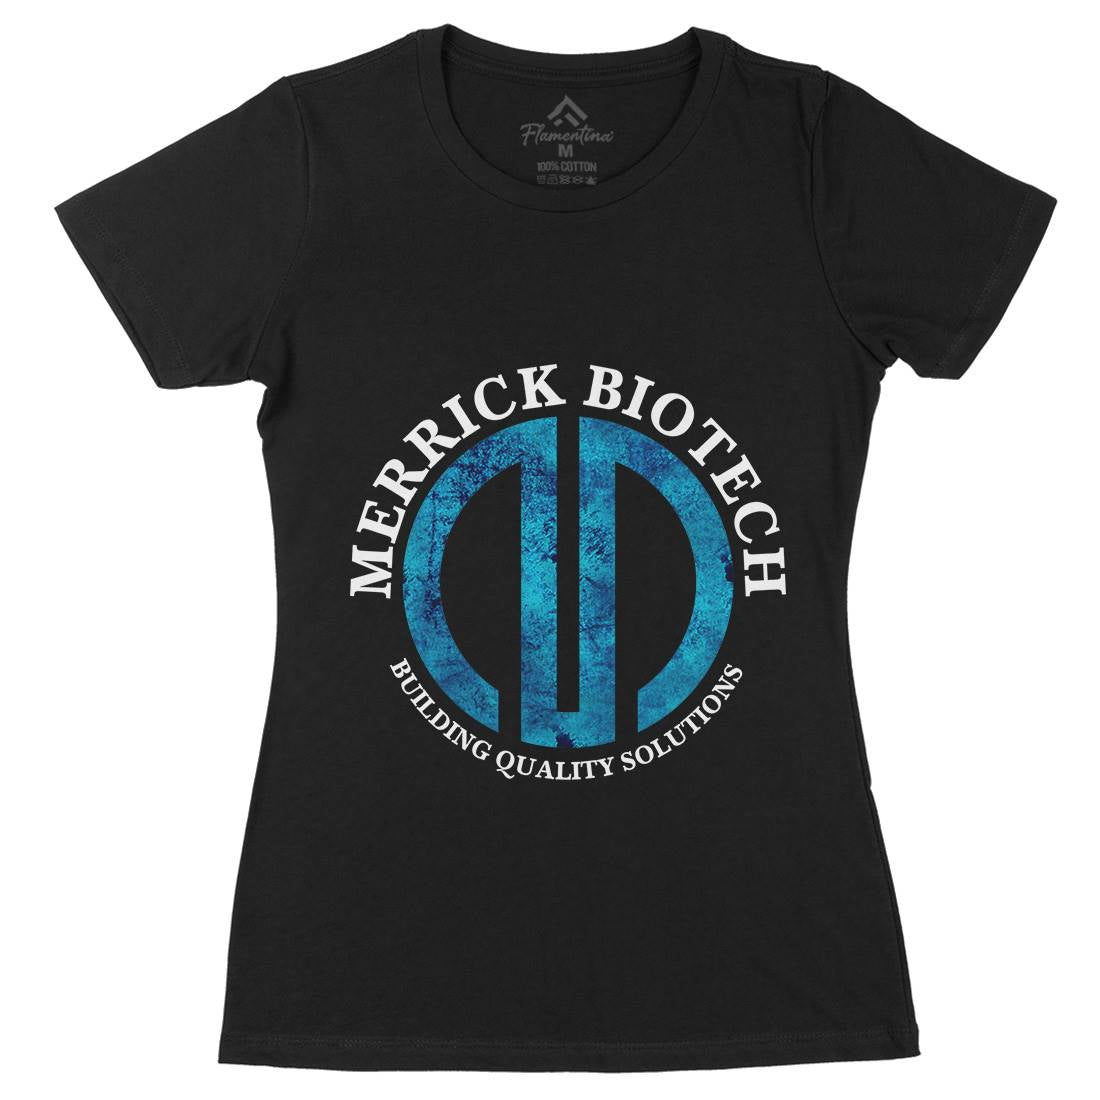 Merrick Biotech Womens Organic Crew Neck T-Shirt Space D393